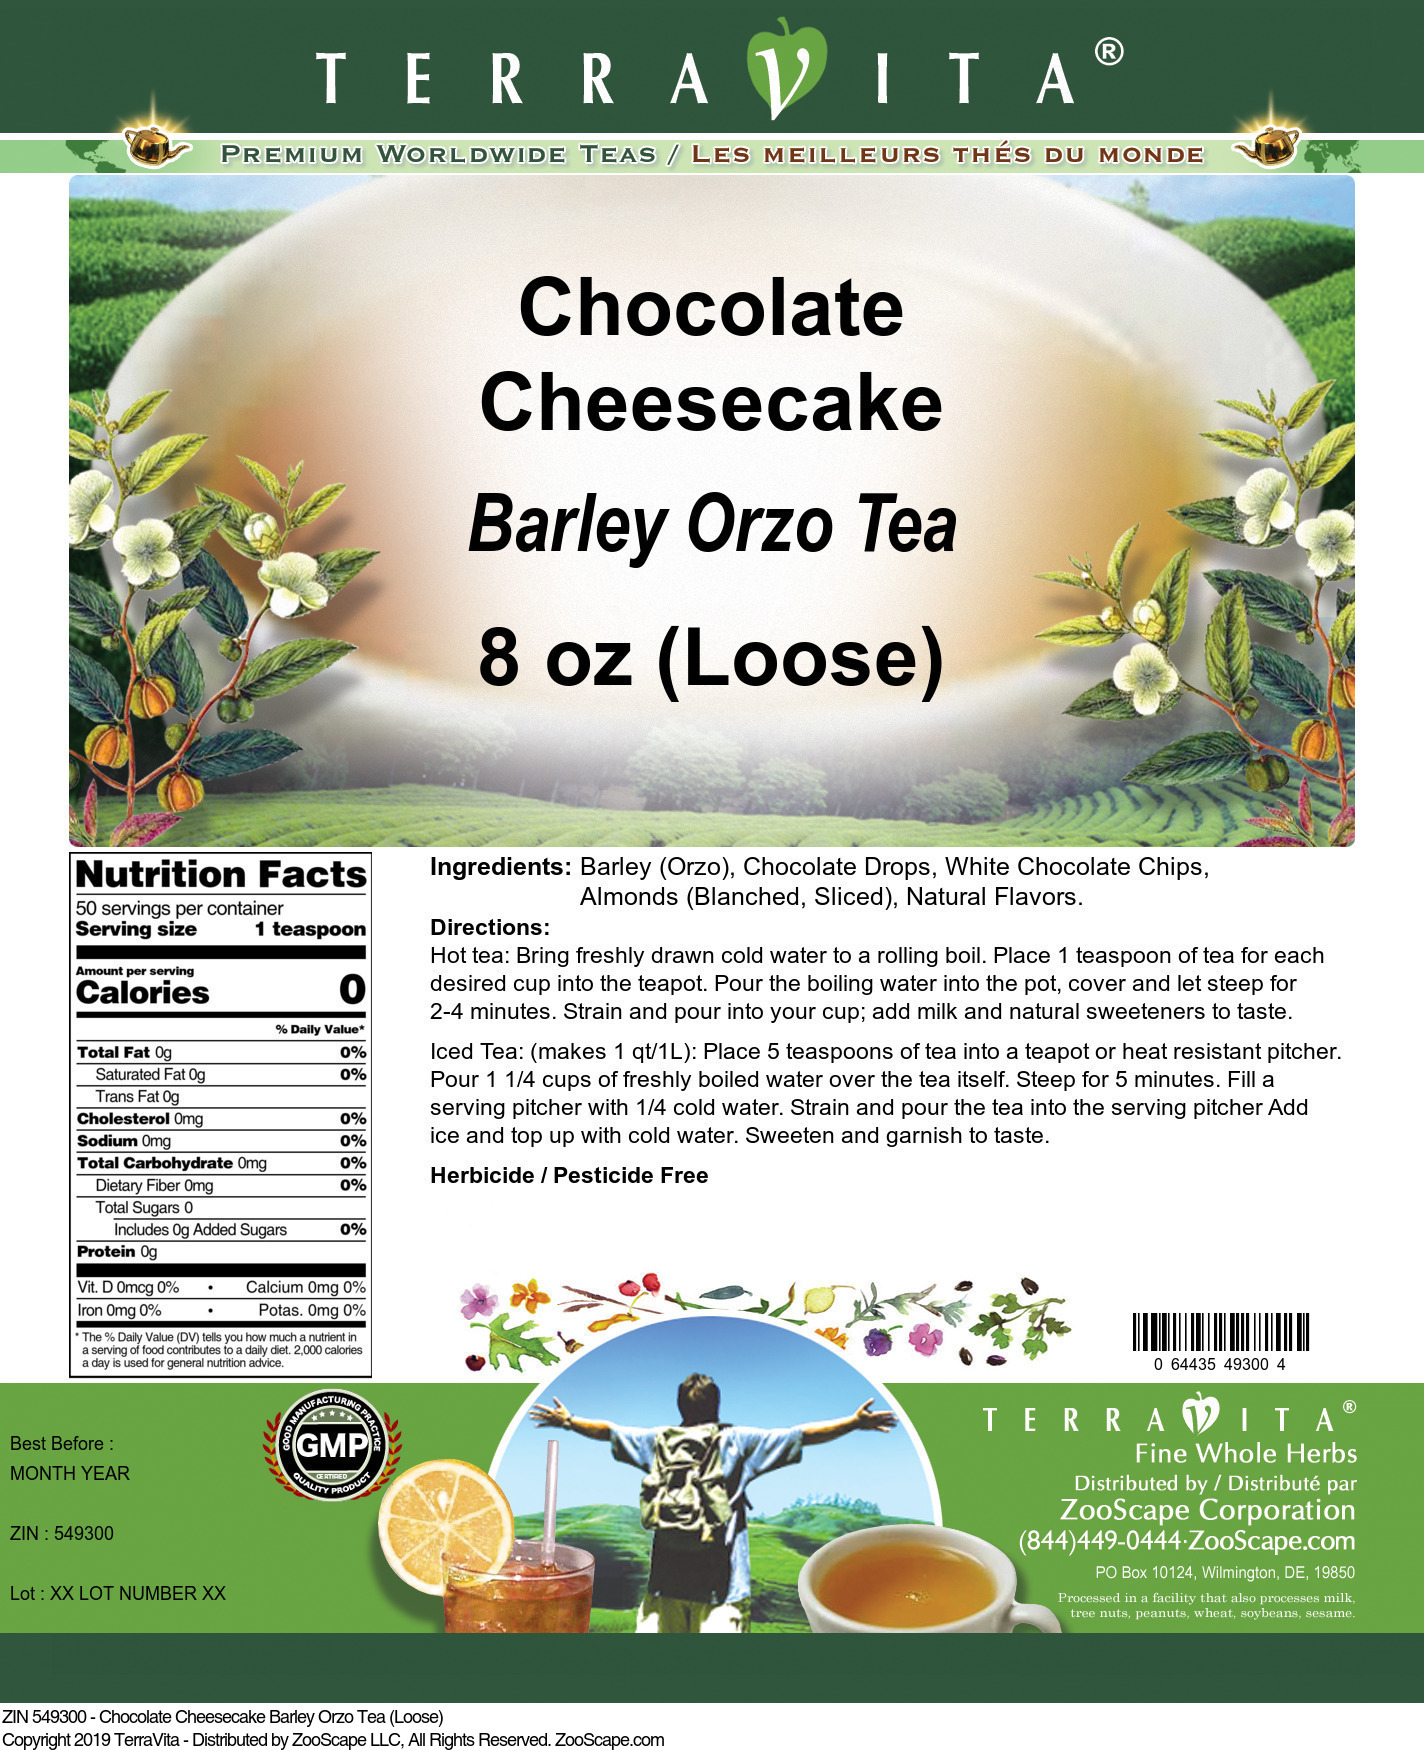 Chocolate Cheesecake Barley Orzo Tea (Loose) - Label